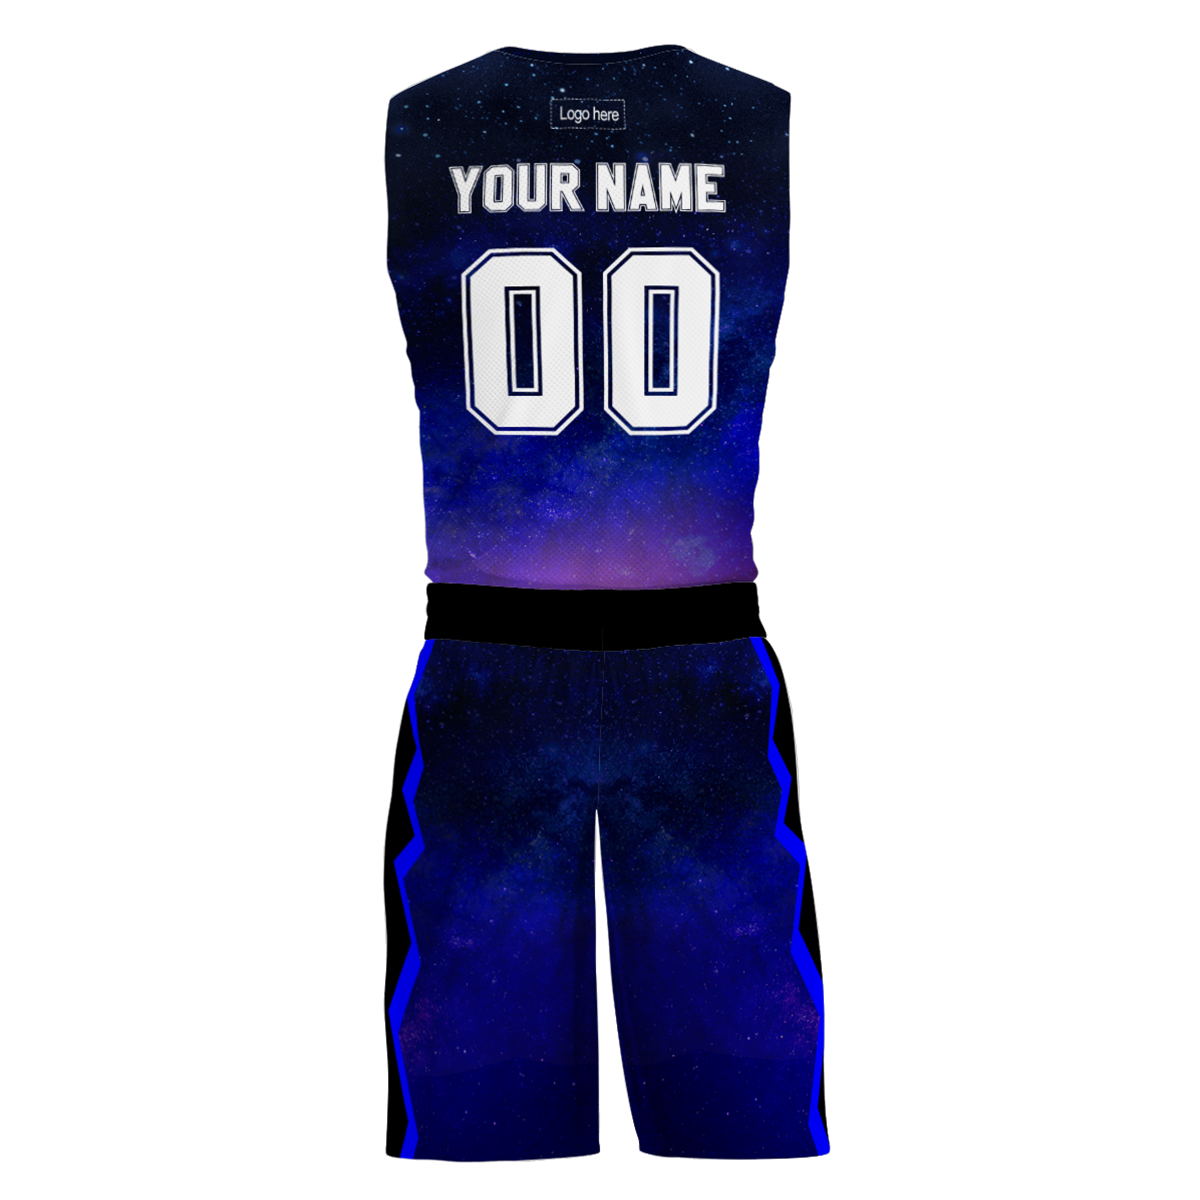 Personalized Design Customized Basketball Jersey Wholesale Blank Sublimation Basketball Wear Suit Print on Demand Uniform Cloth Set